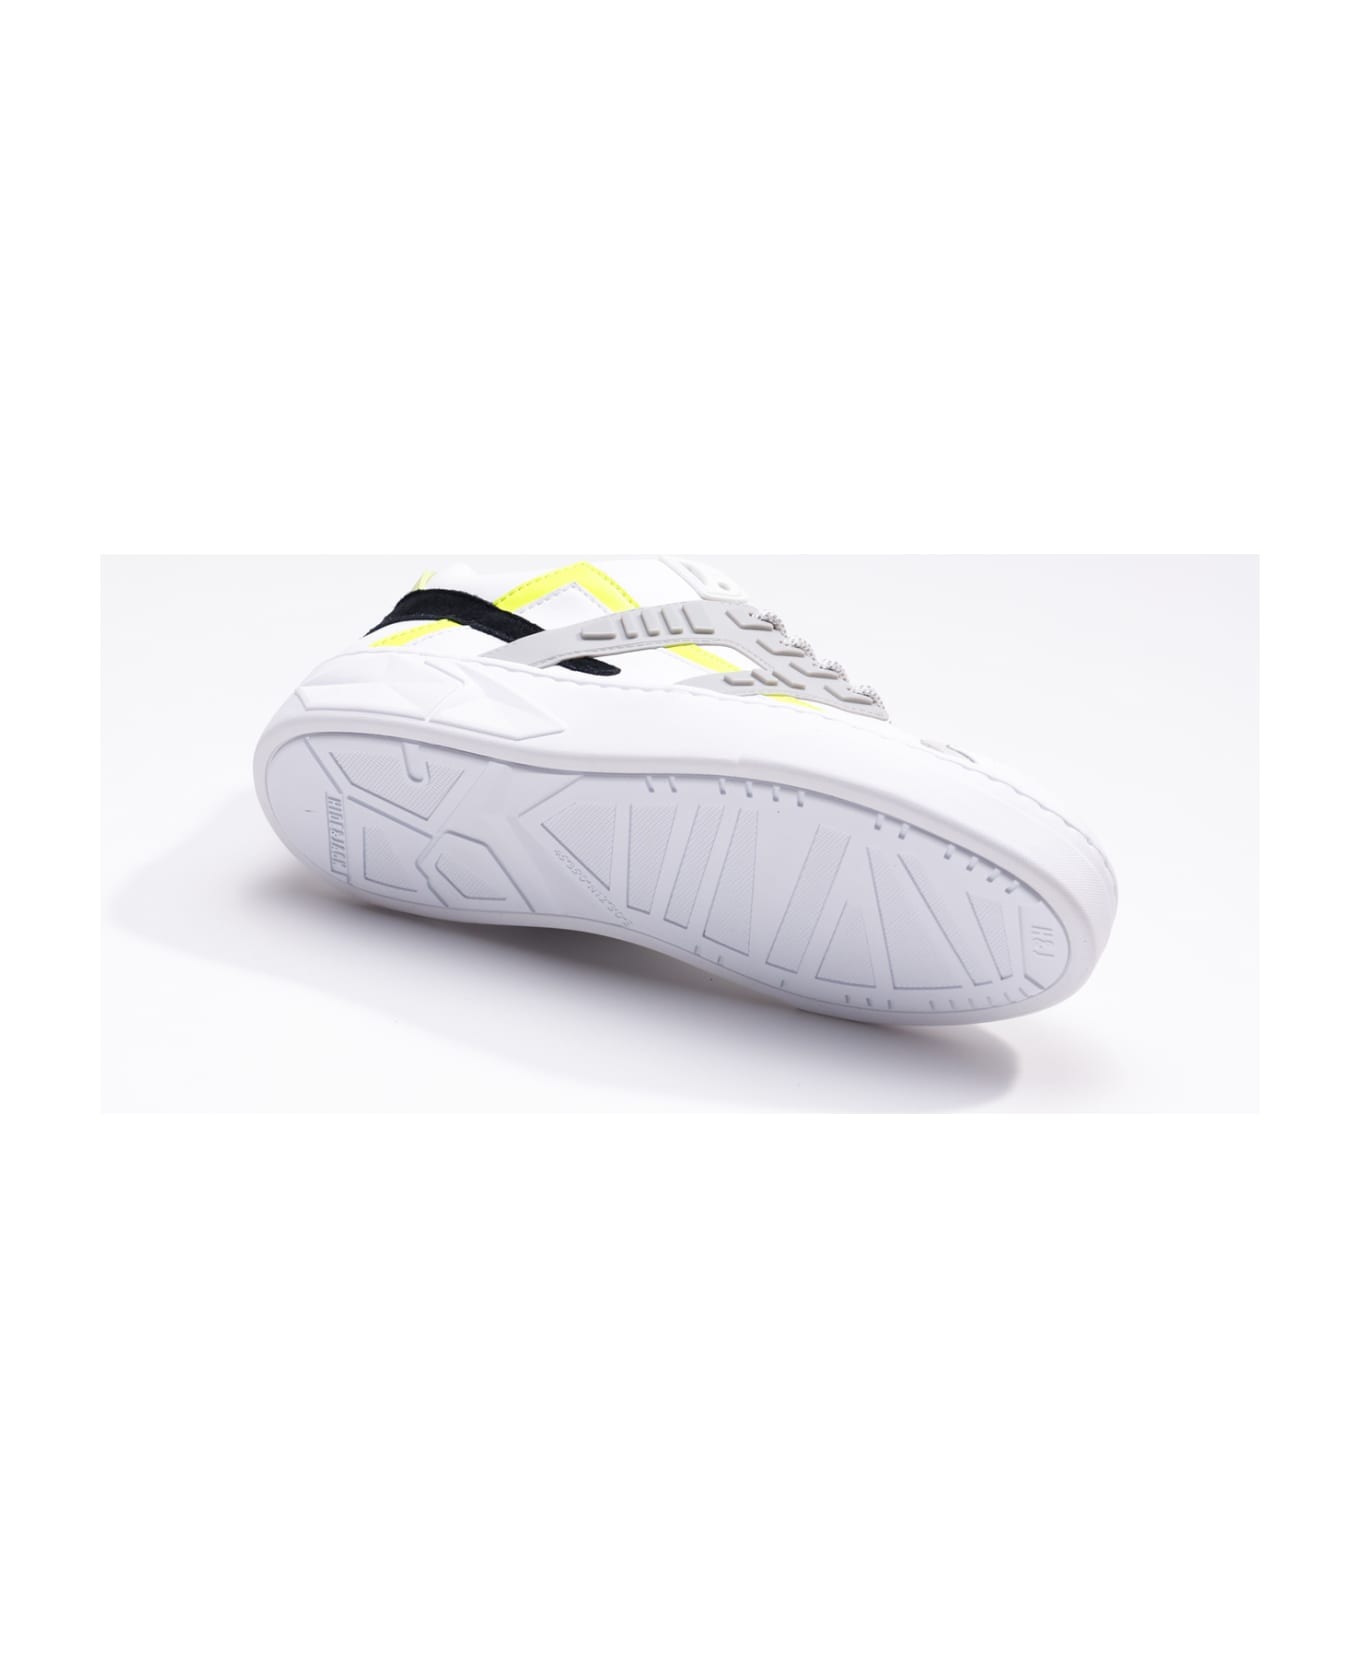 Hide&Jack Low Top Sneaker - Mini Silverstone Yellow White スニーカー